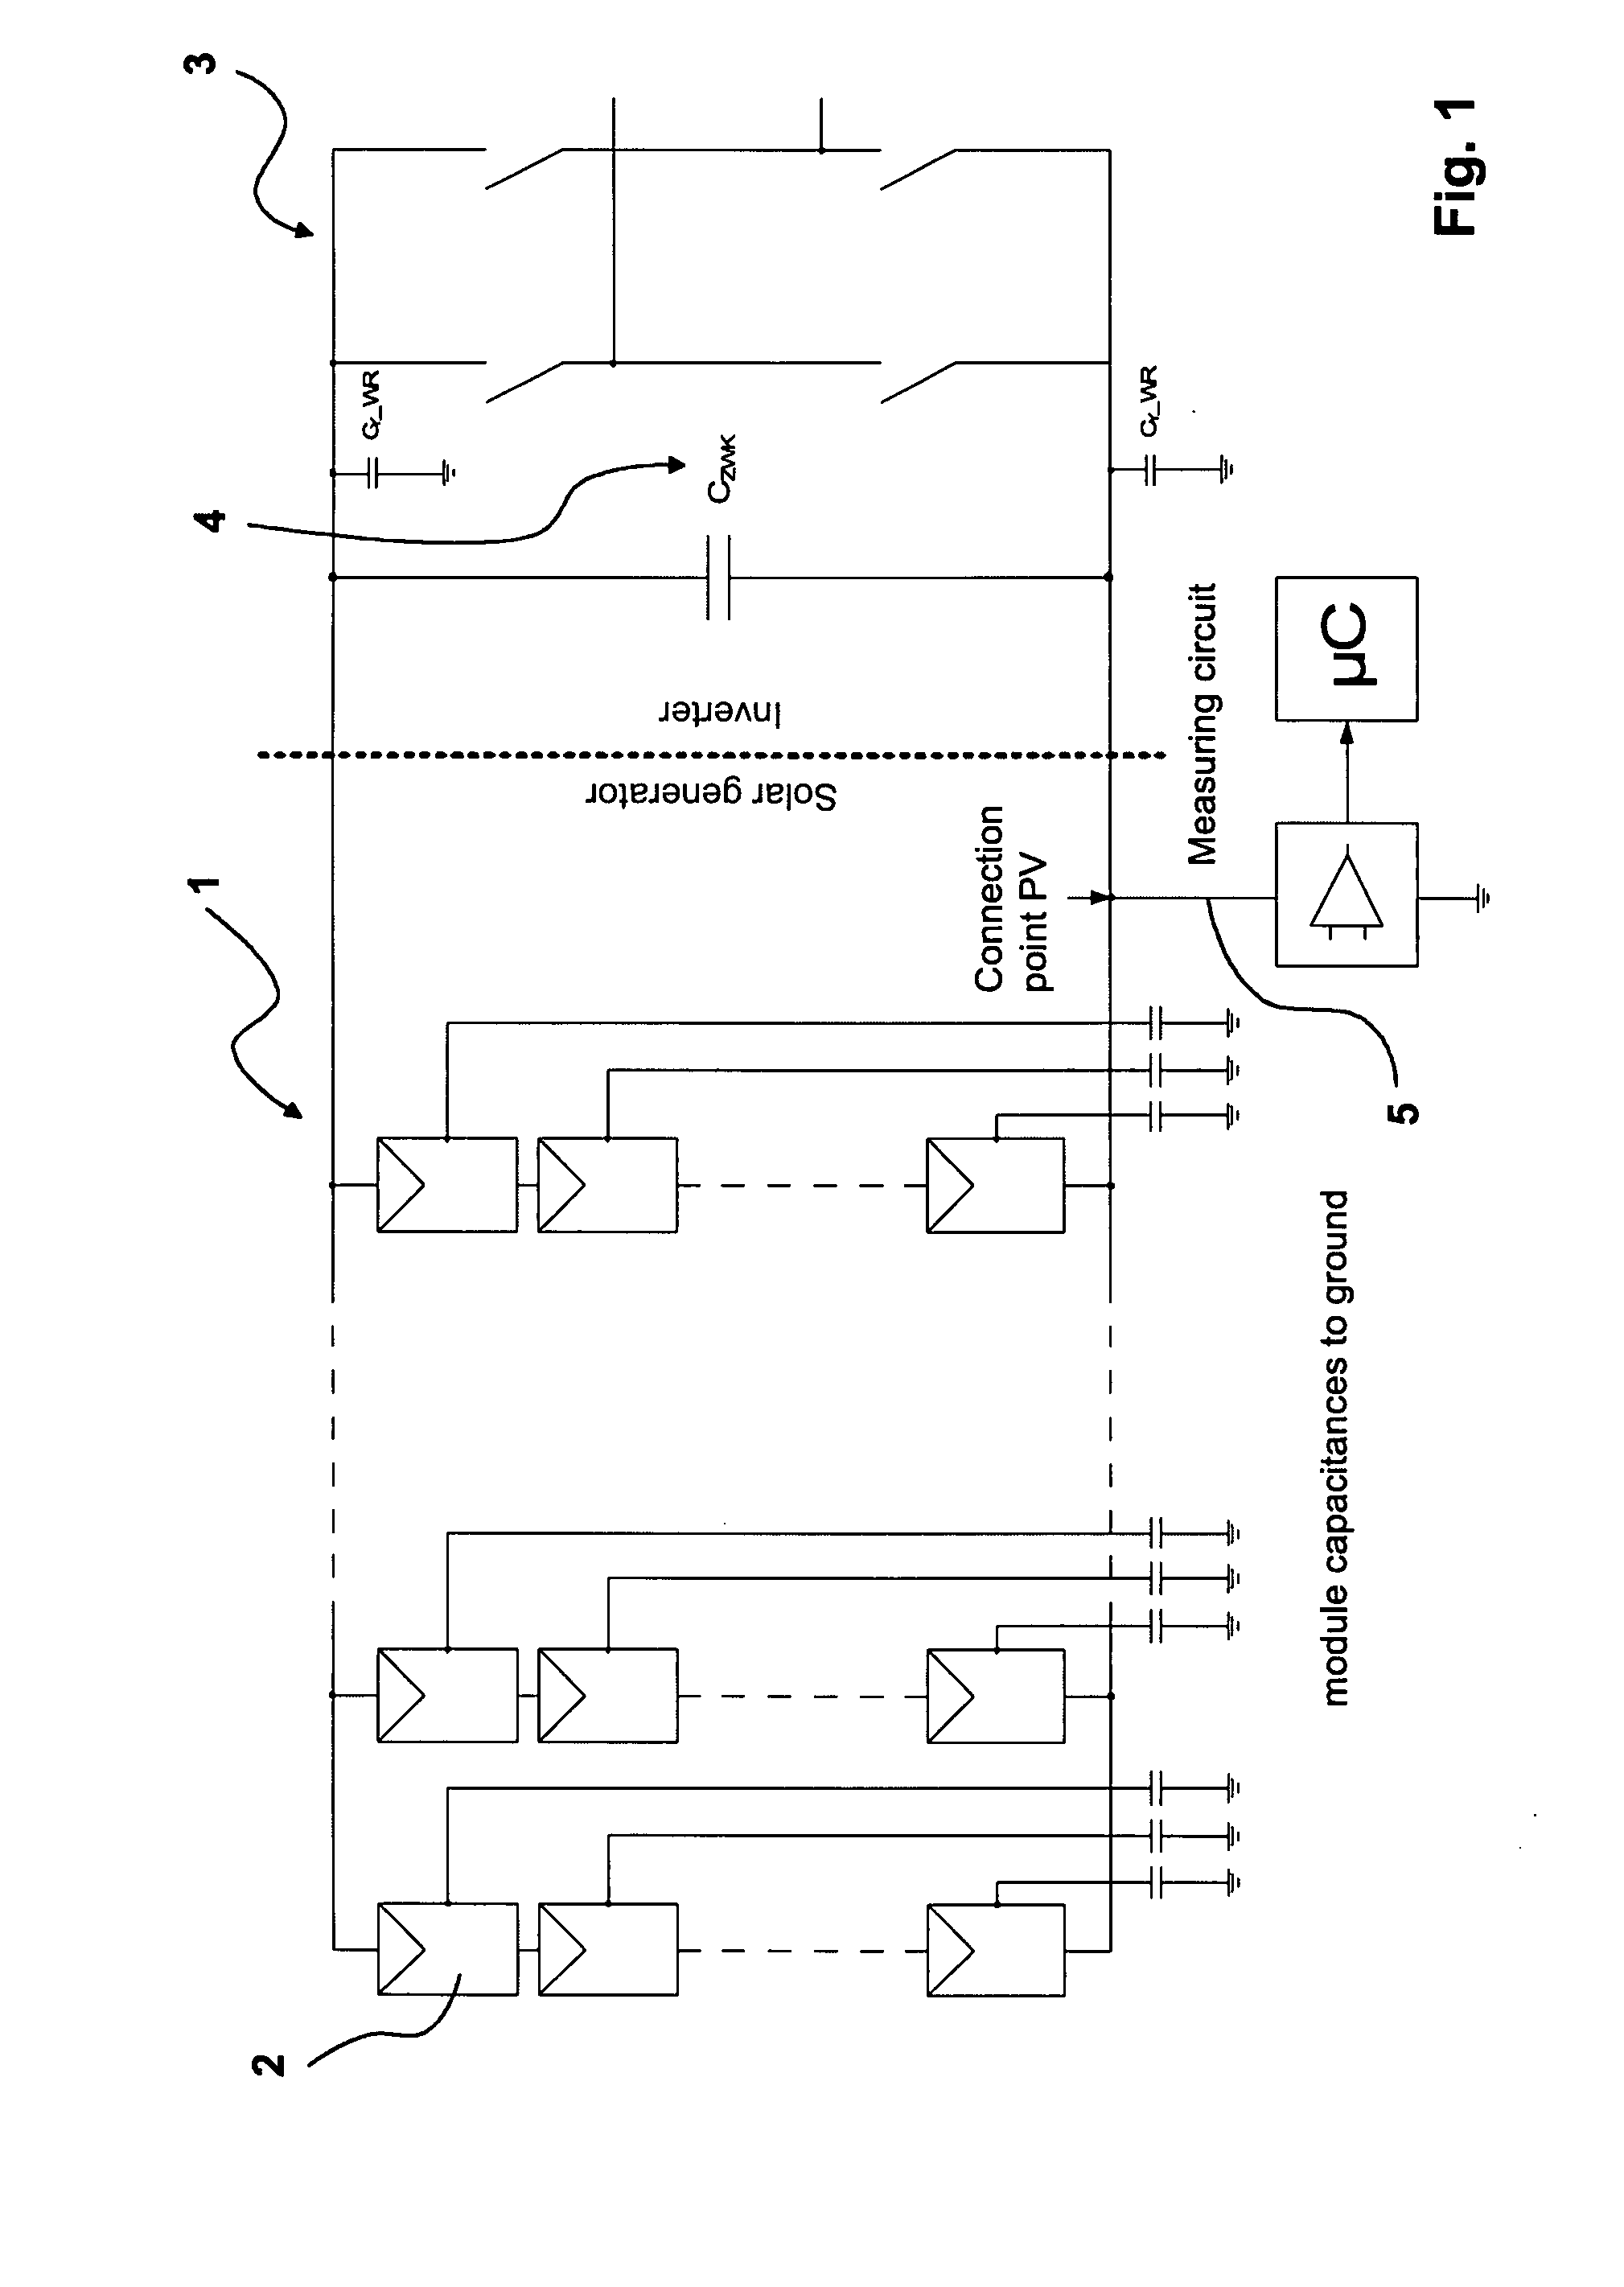 Method of monitoring a photvoltaic generator